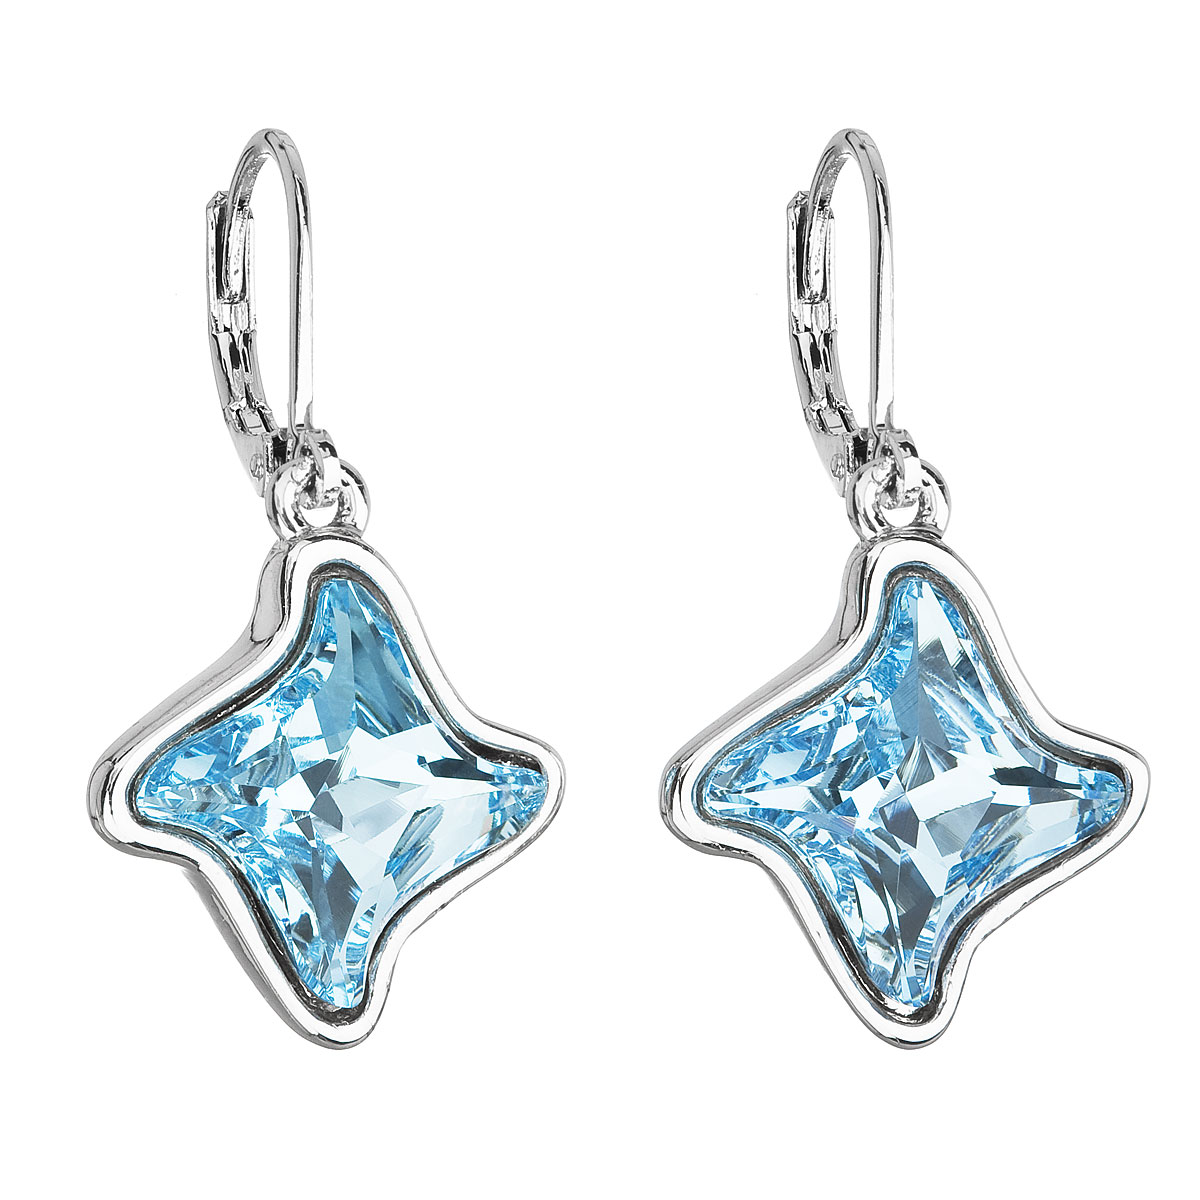 Evolution Group Náušnice bižuterie se Swarovski krystaly modrá hvězdička 51055.3 aqua